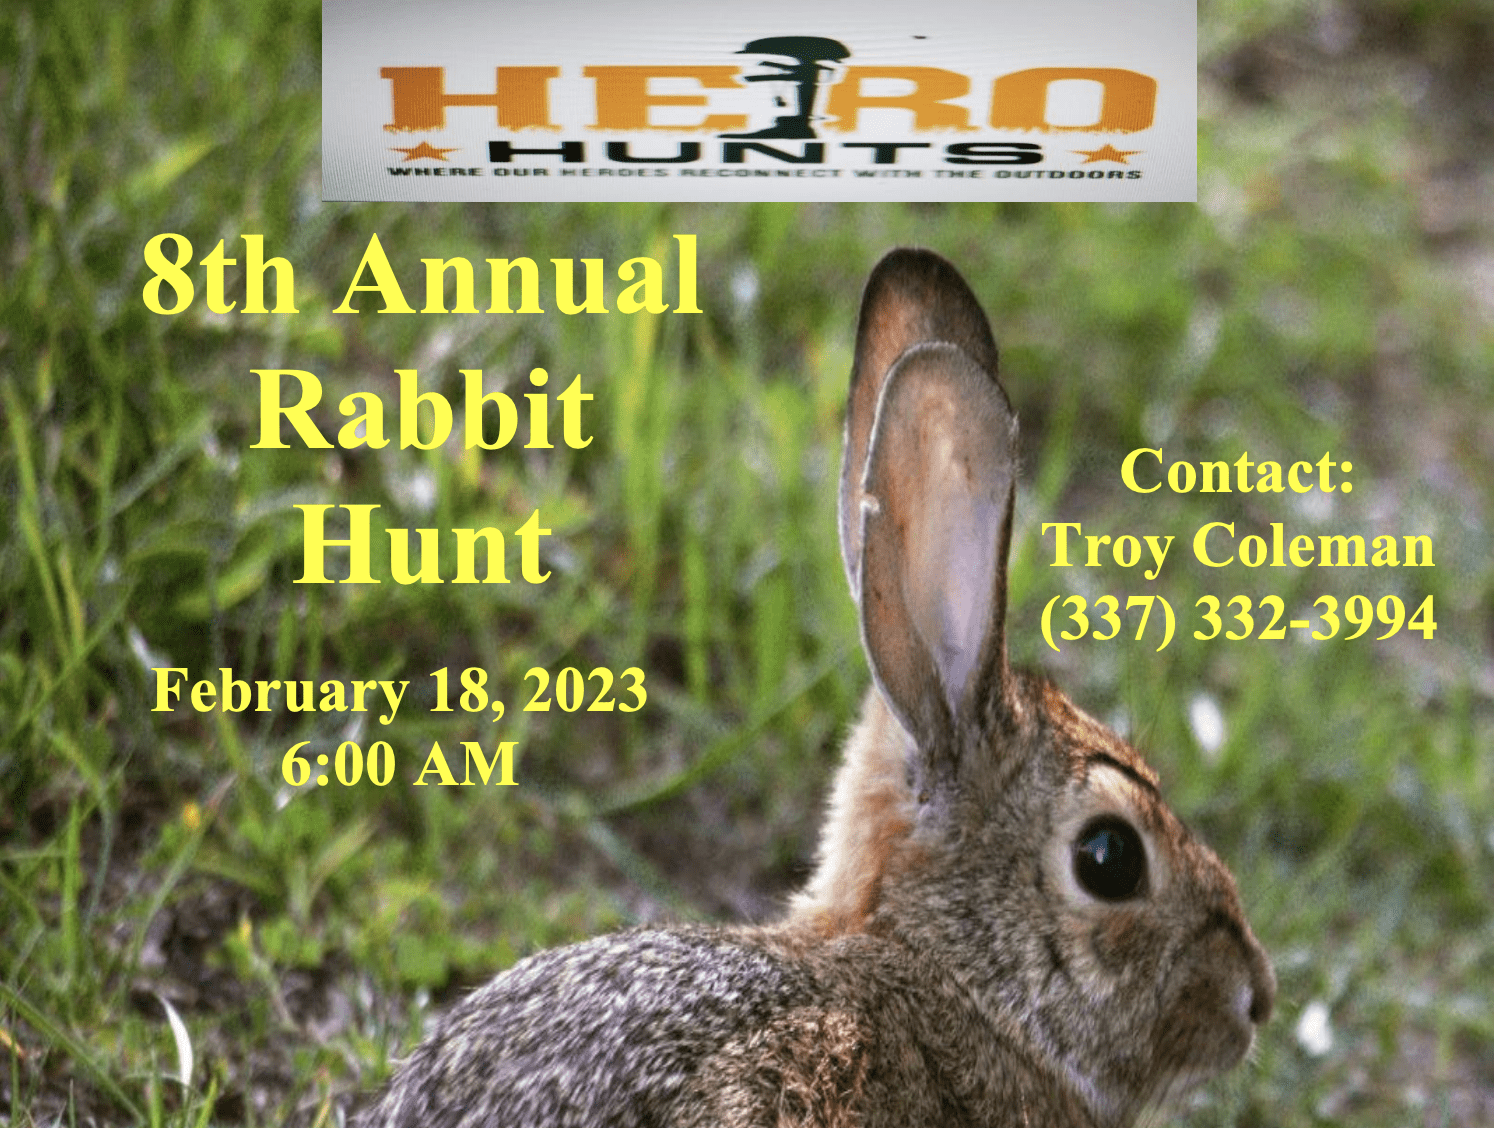 Hero Hunts 8th Annual Rabbit Hunt